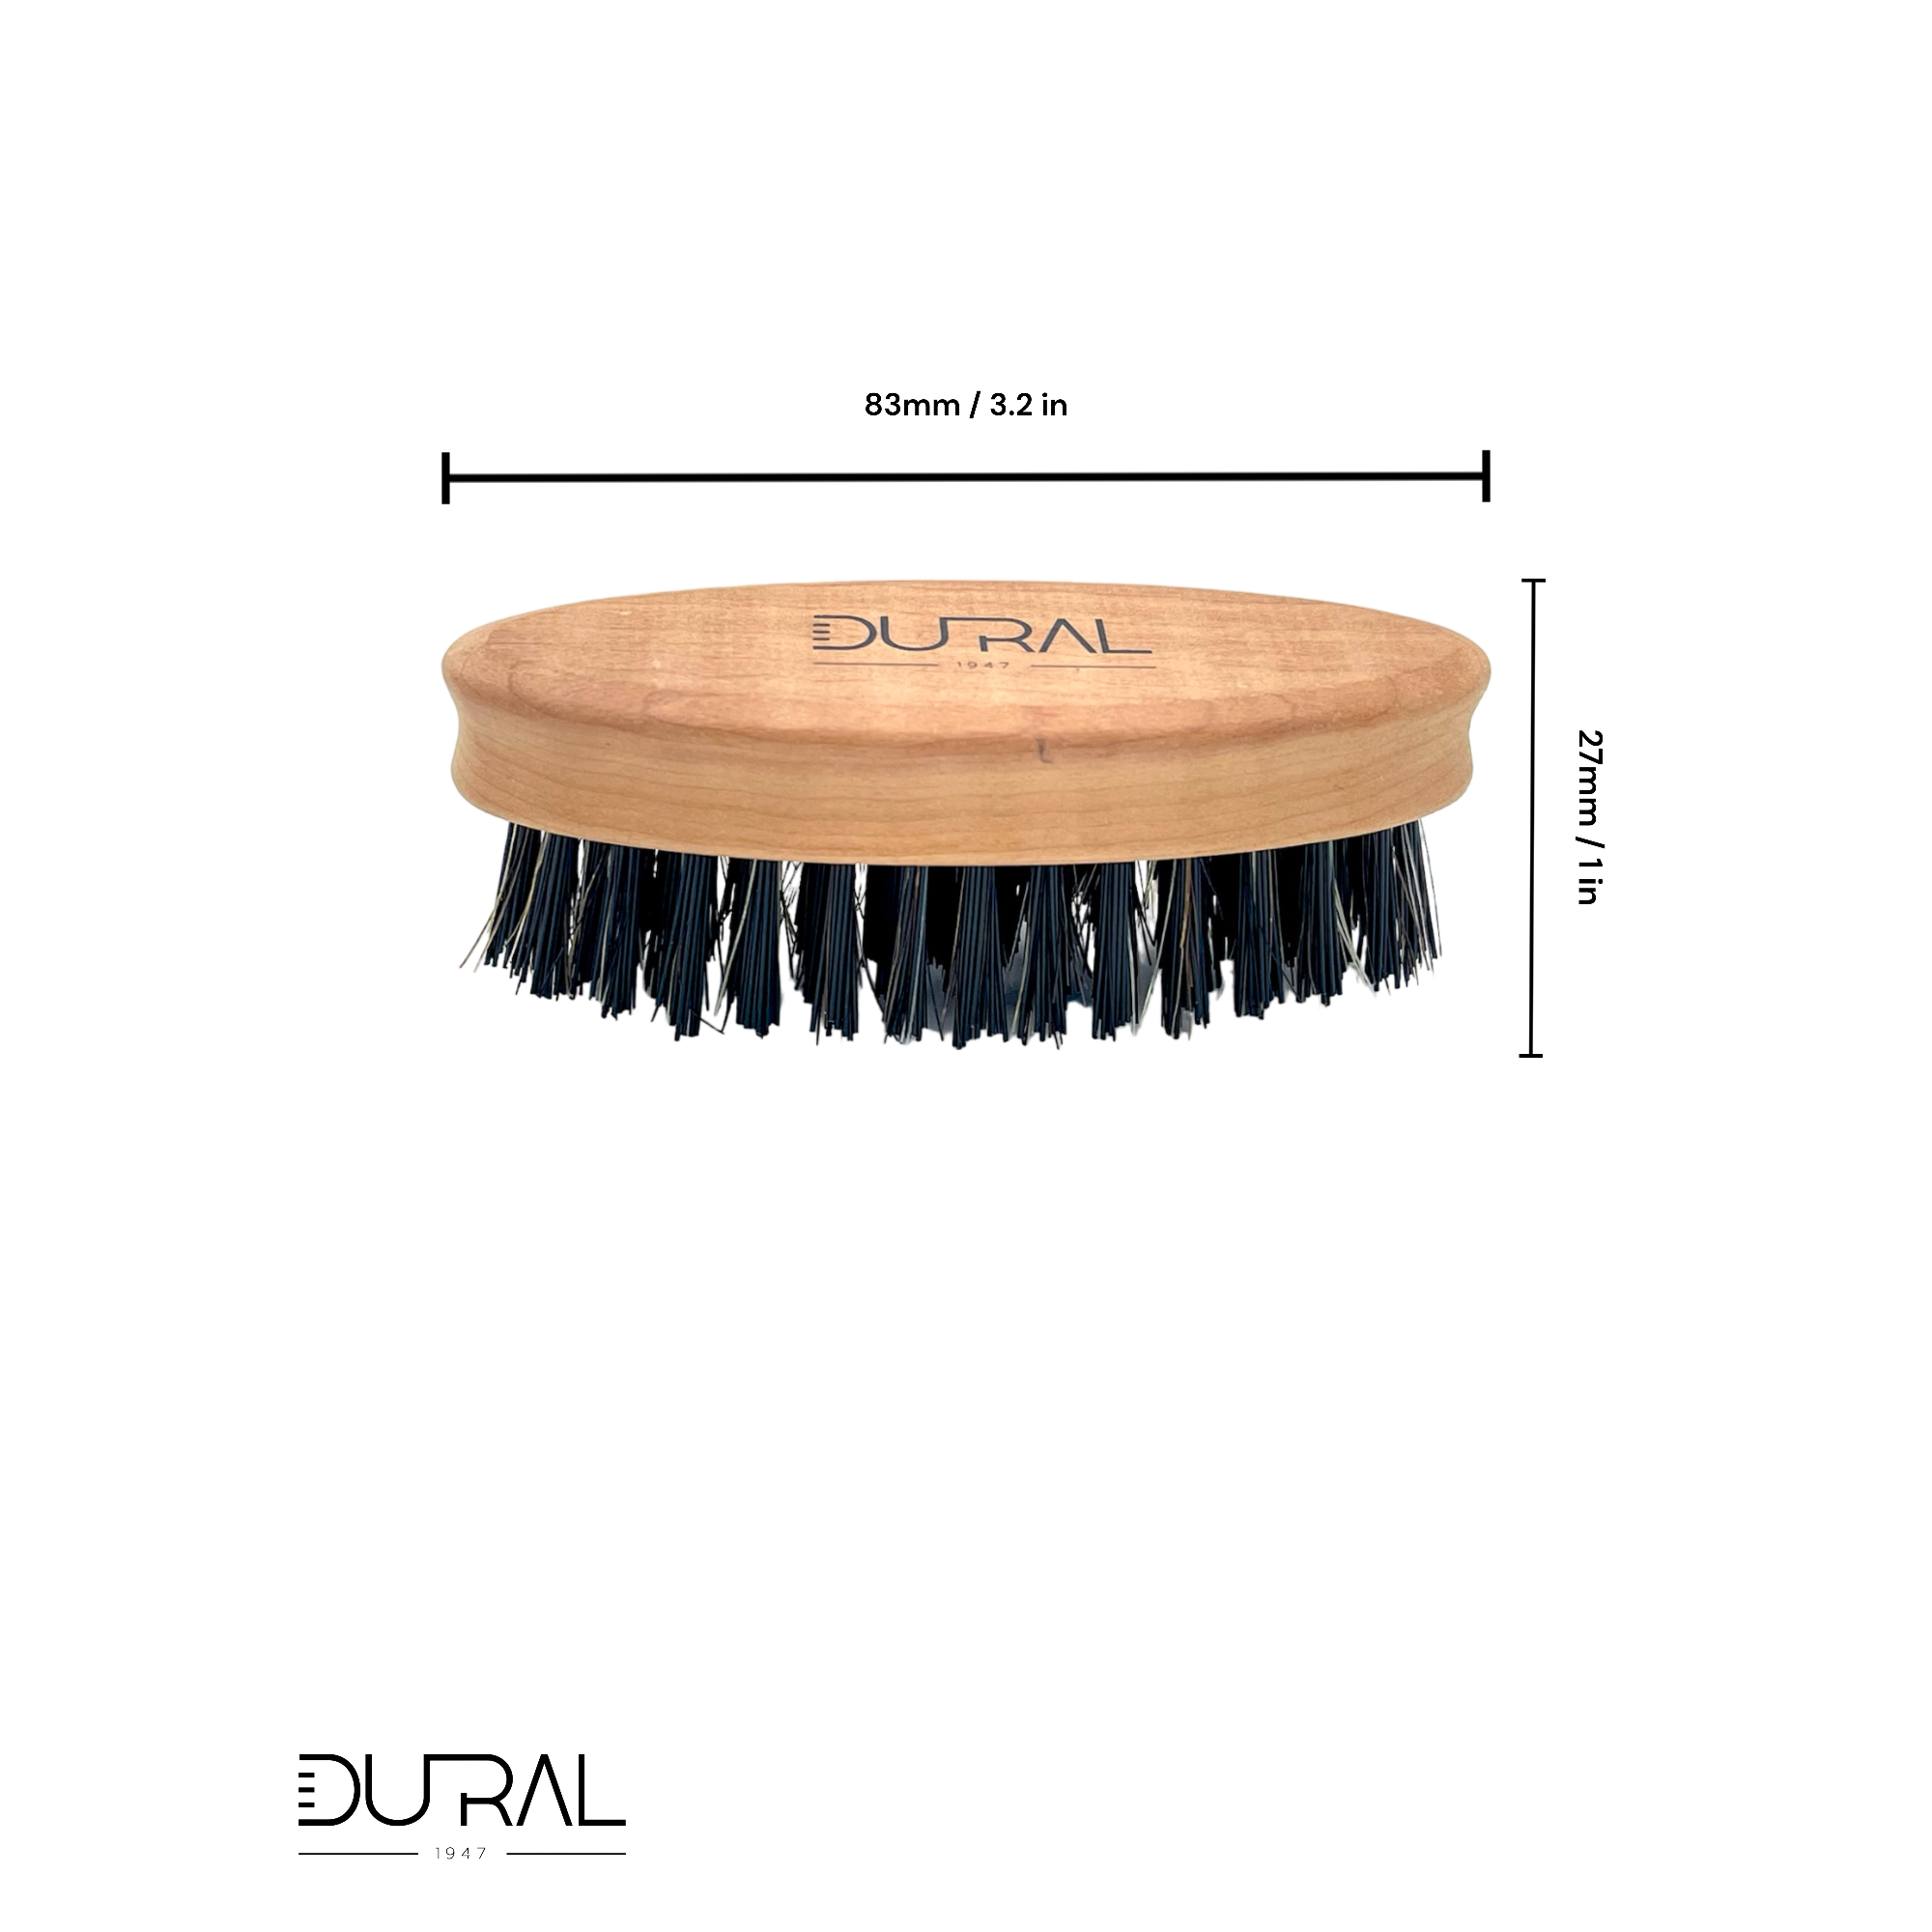 Dural Pear wood small beard brush - Halal compliant